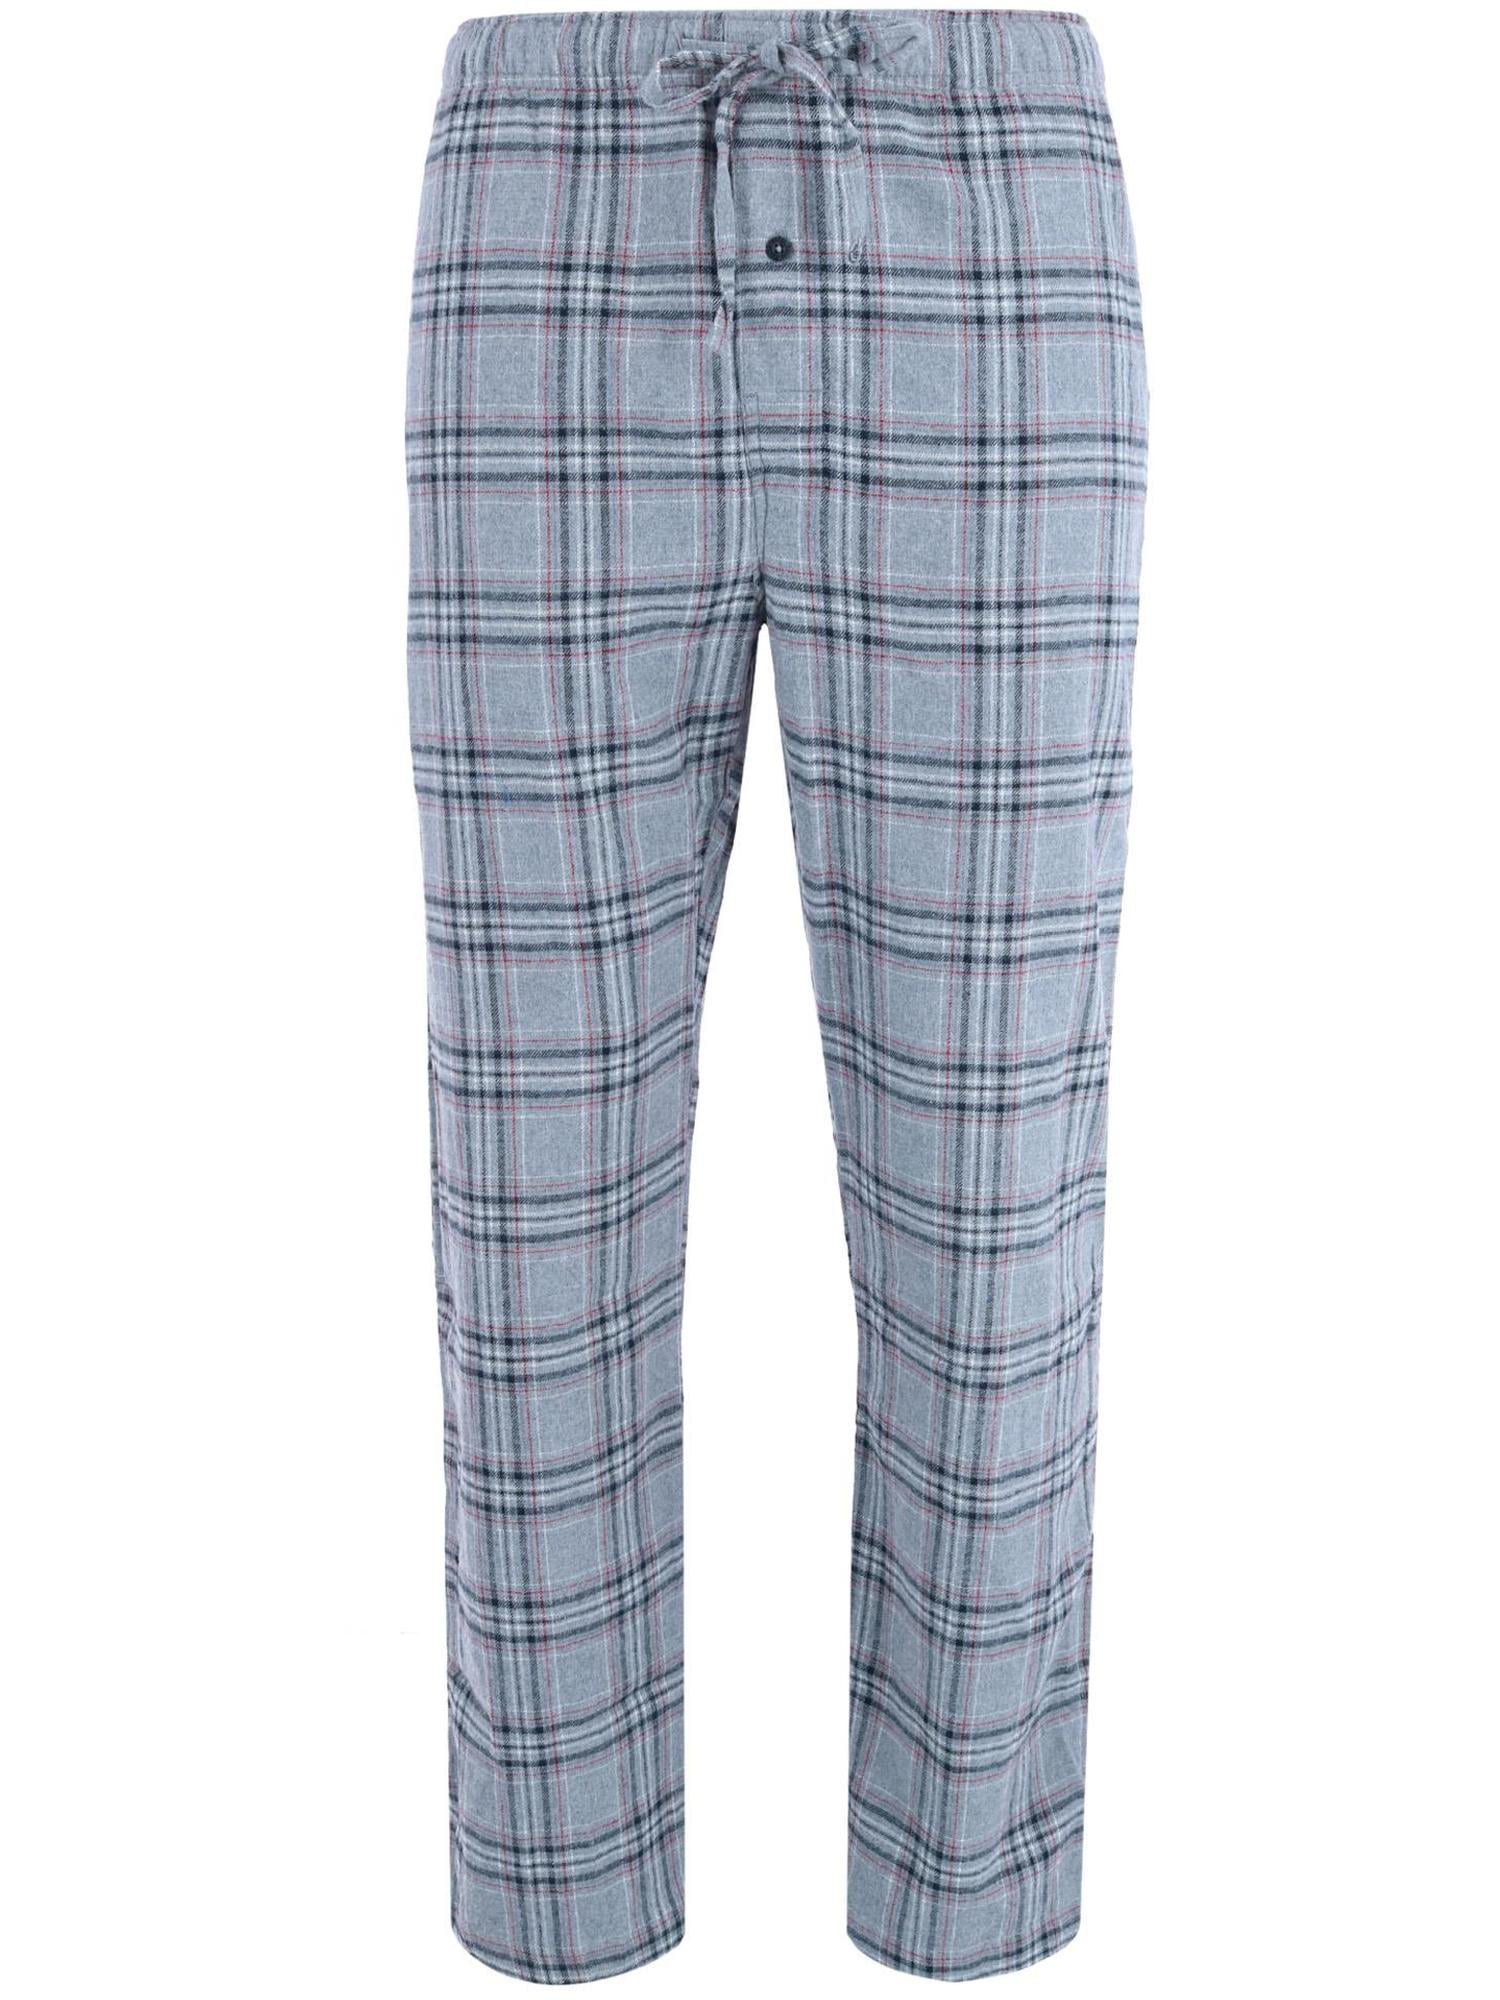 New Hanes Mens Big & Tall Cotton Long Sleeve Shirt and Flannel Pajama Pants 